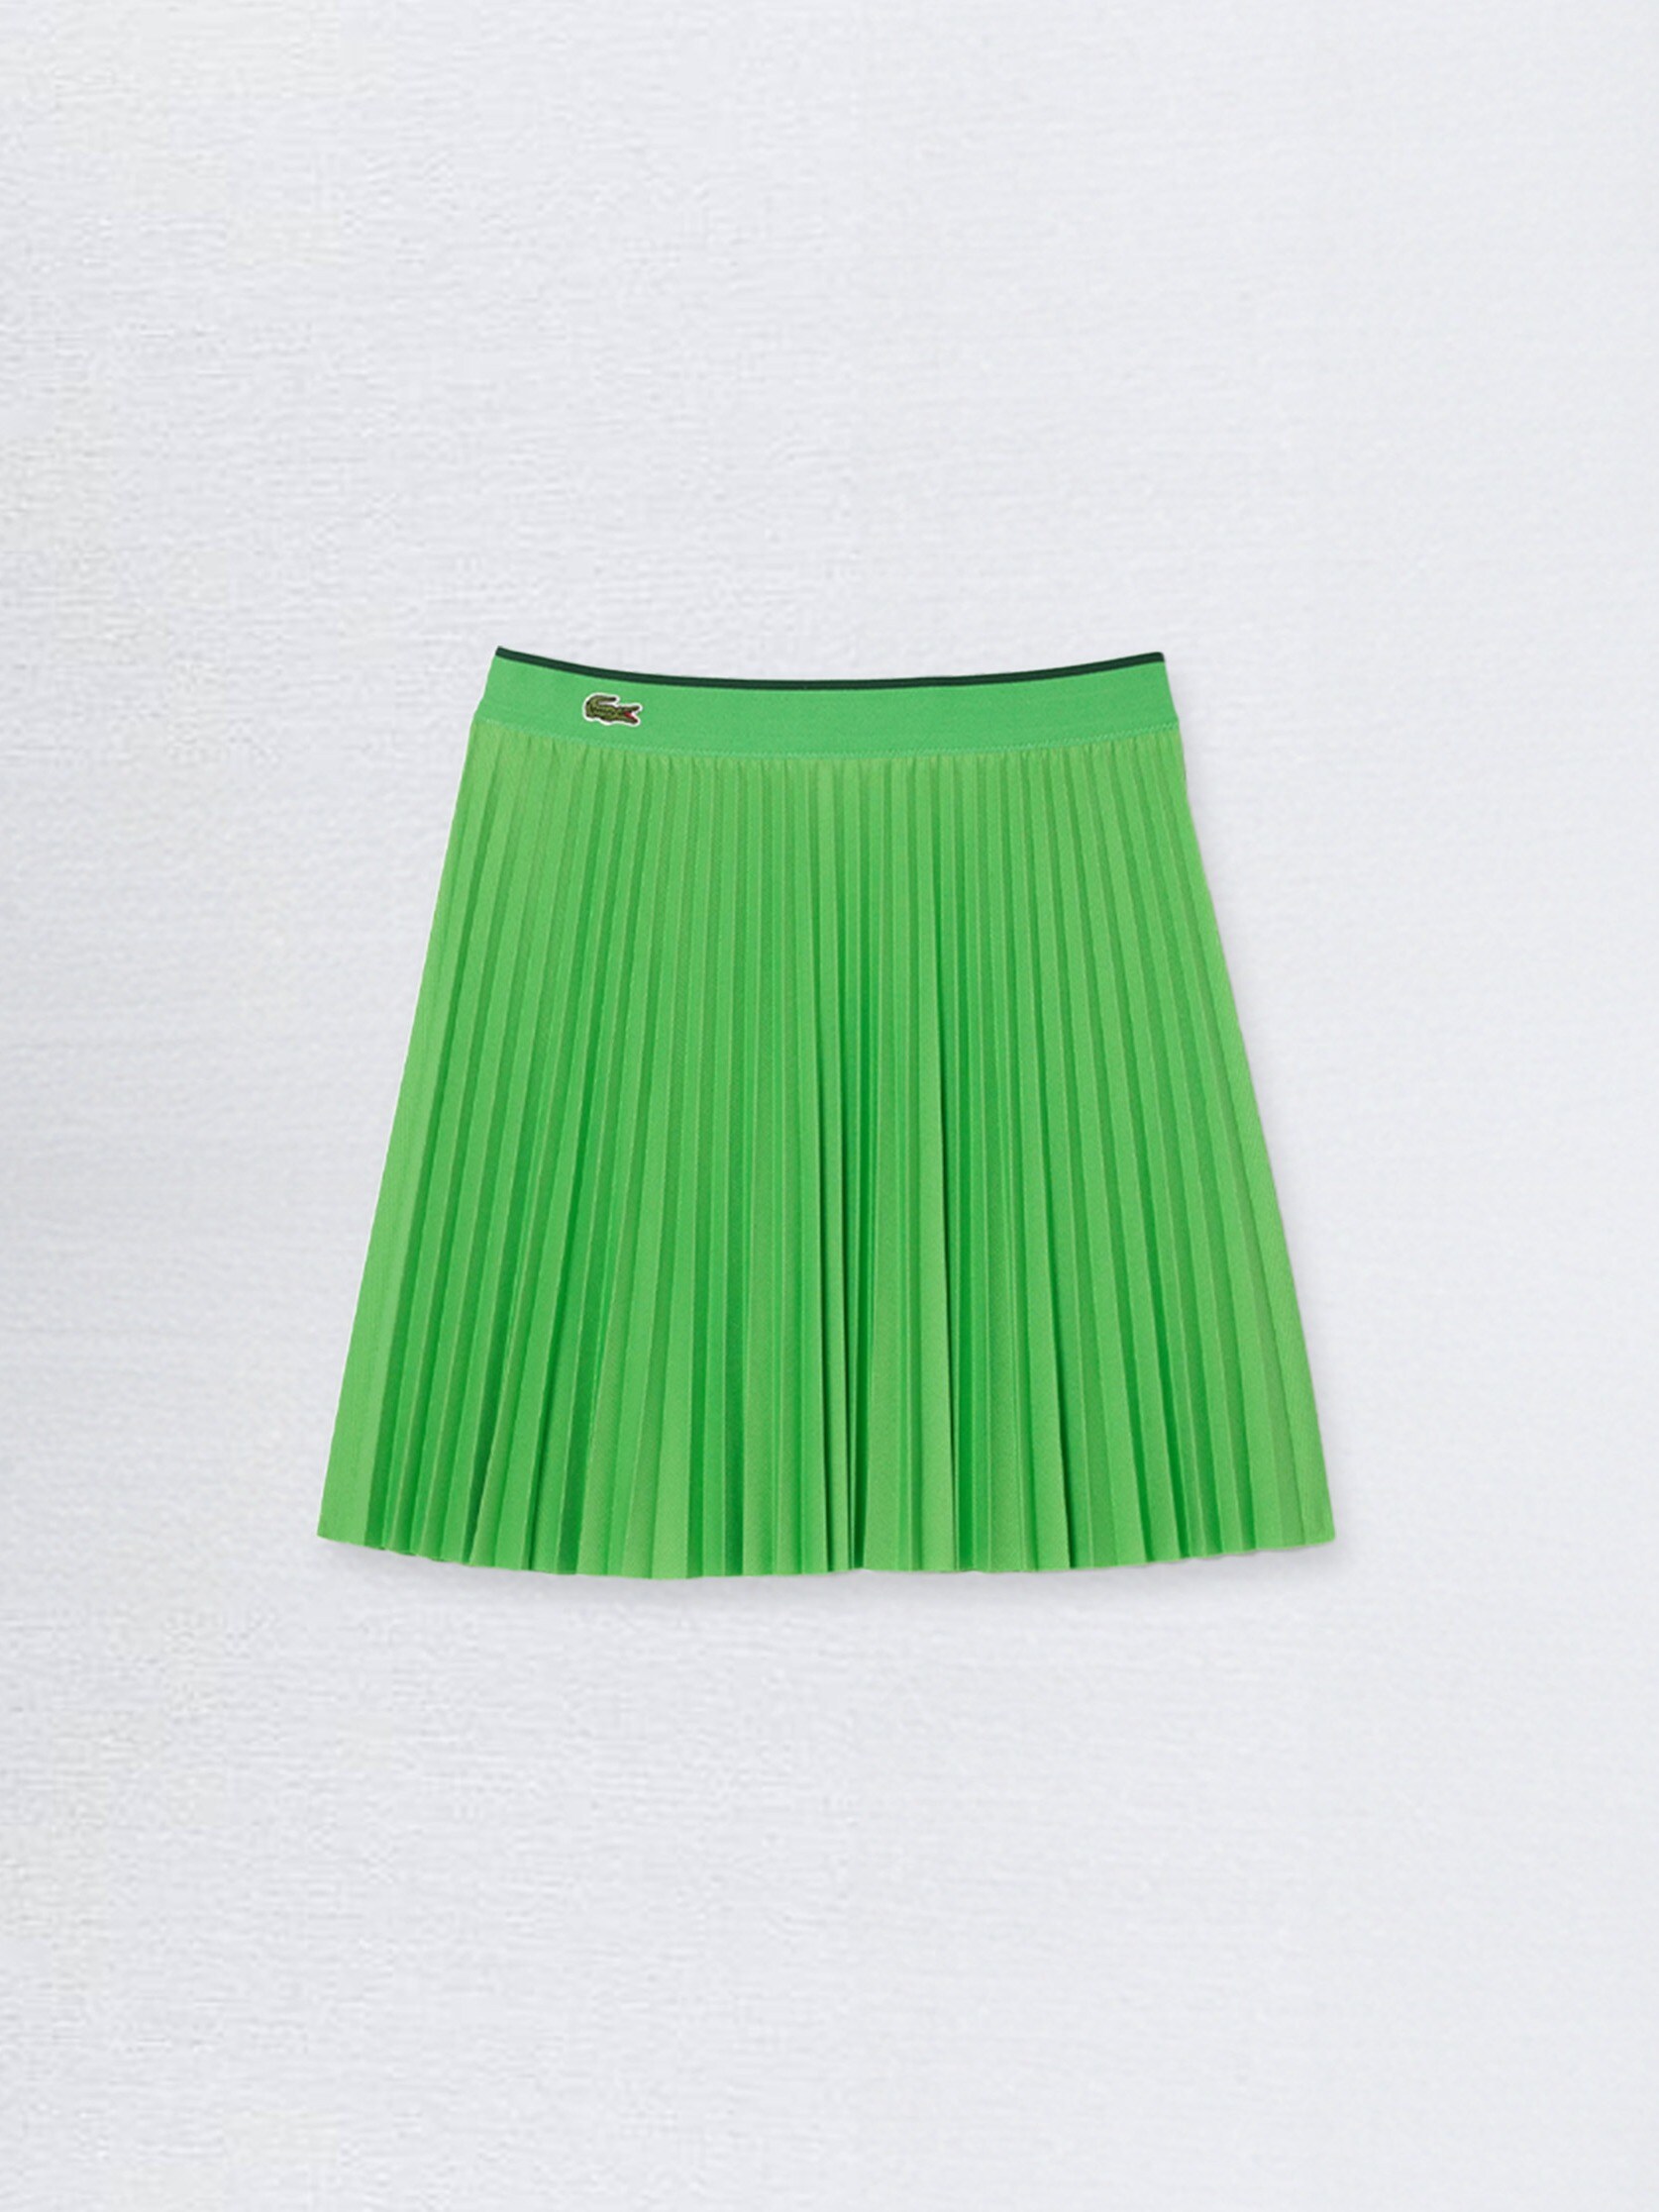 lacoste-green-tennis-skirt_thenodmag